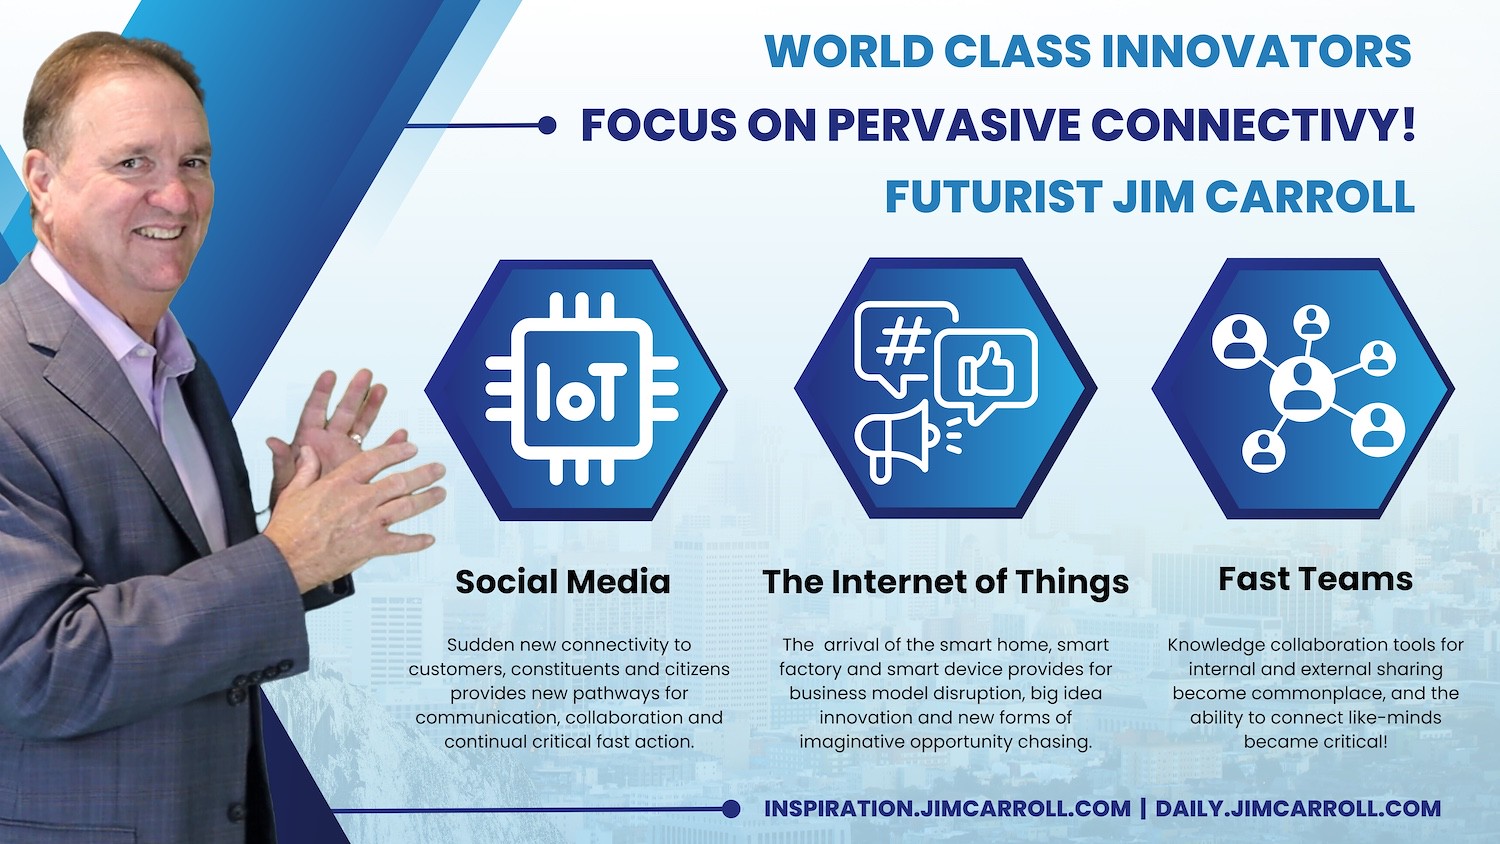 "World class innovators focus on pervasive connectivity" - Futurist Jim Carroll